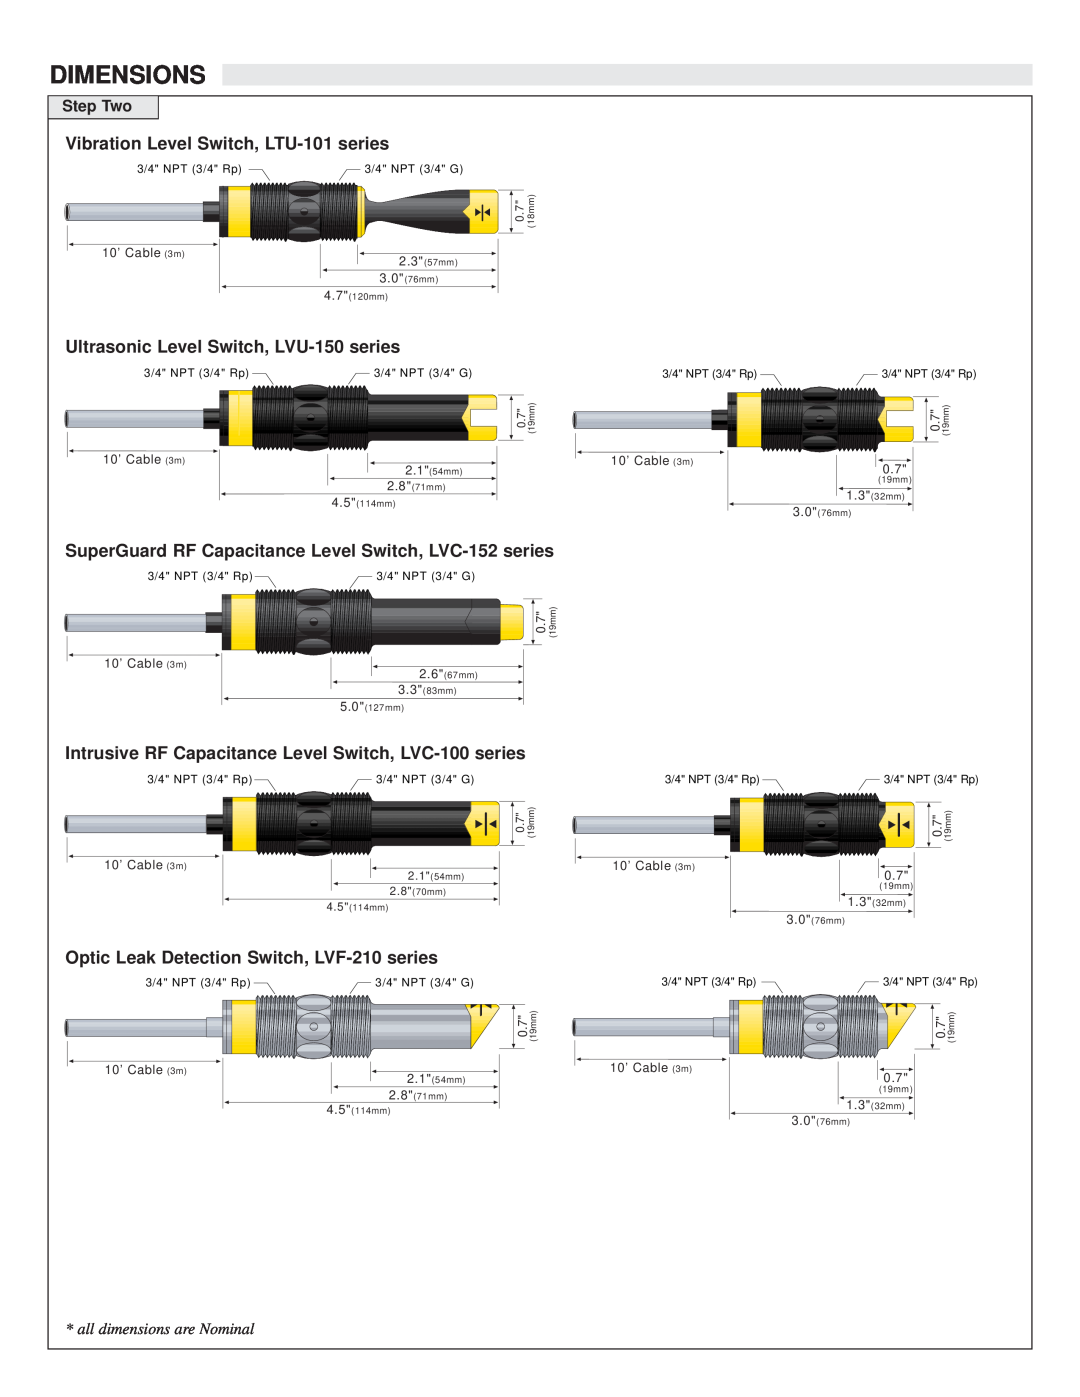 Omega LVC-152 Dimensions, Vibration Level Switch, LTU-101 series, Ultrasonic Level Switch, LVU-150 series, Step Two 